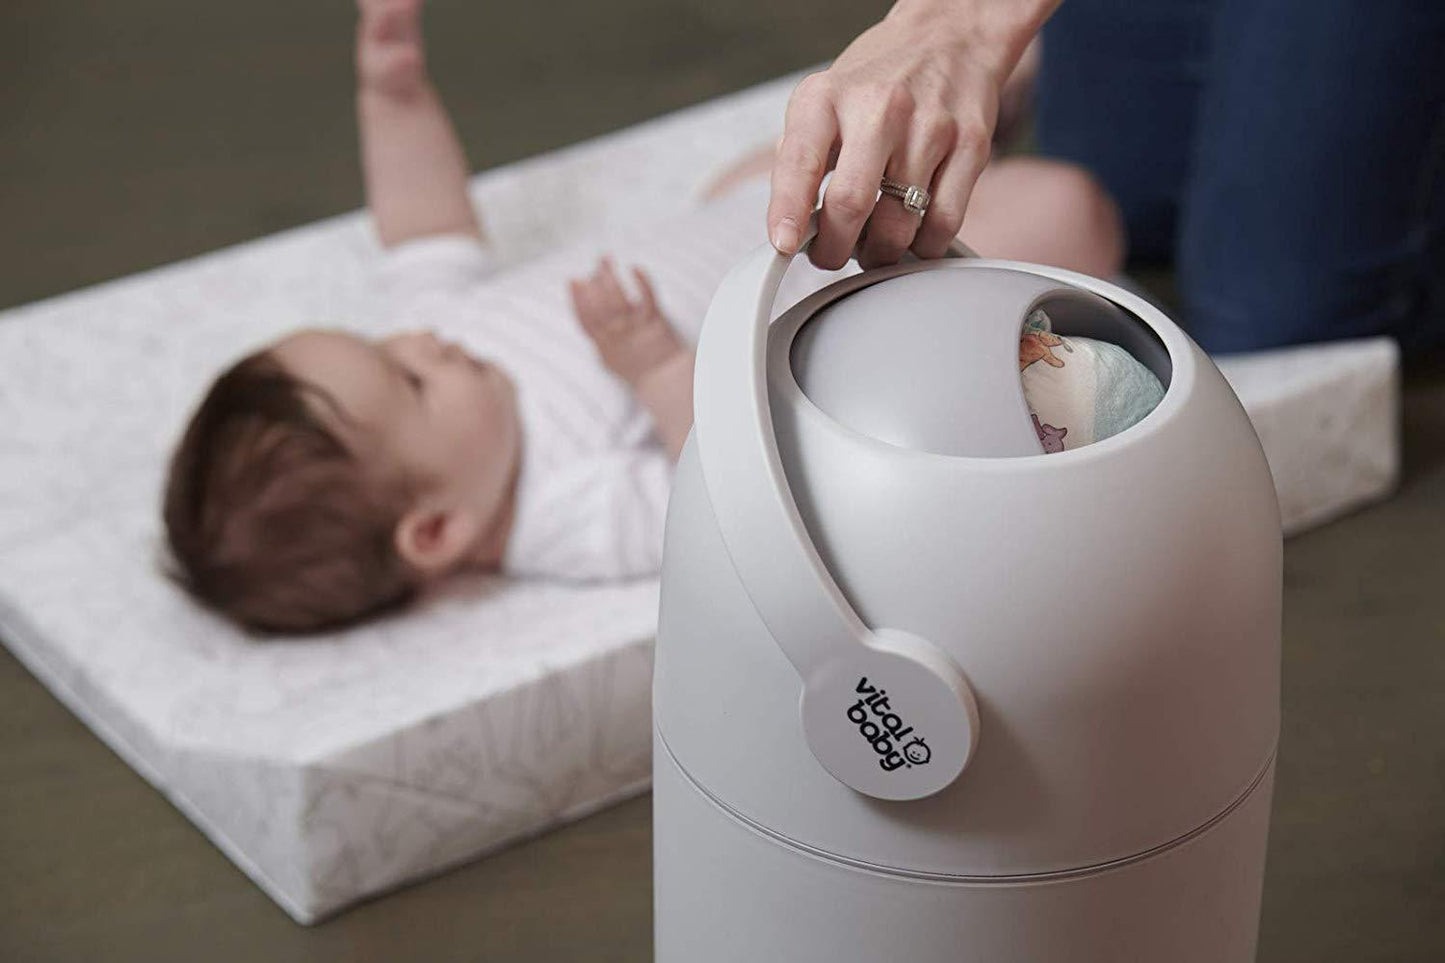 Vital Baby HYGIENE - Lixeira com sistema anti odor Anne Claire Baby Store 